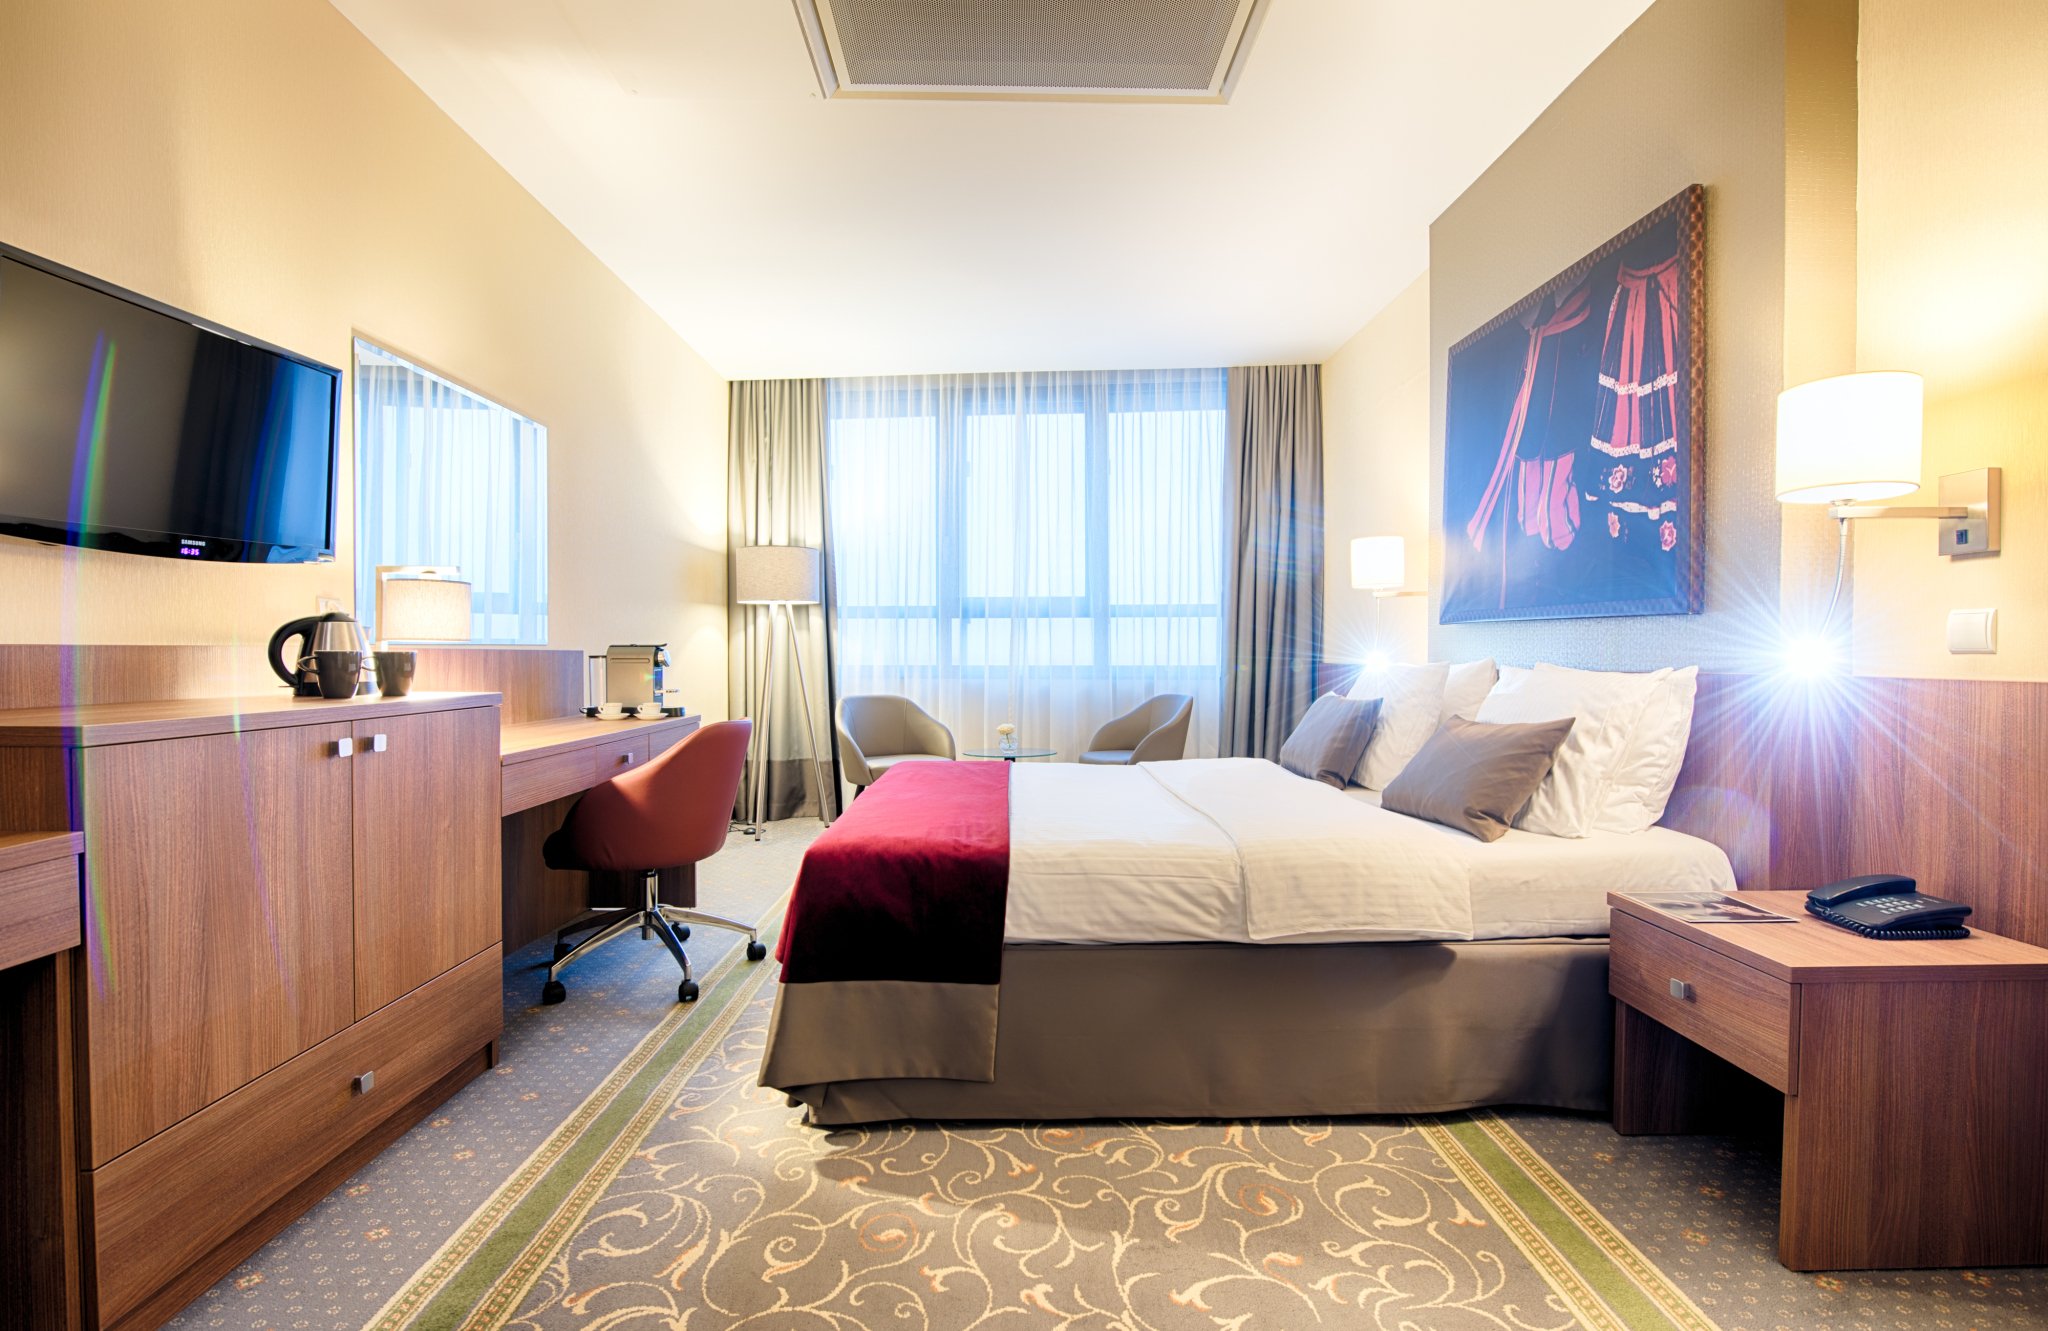 Leonardo Royal Hotel Warsaw - Comfort Room